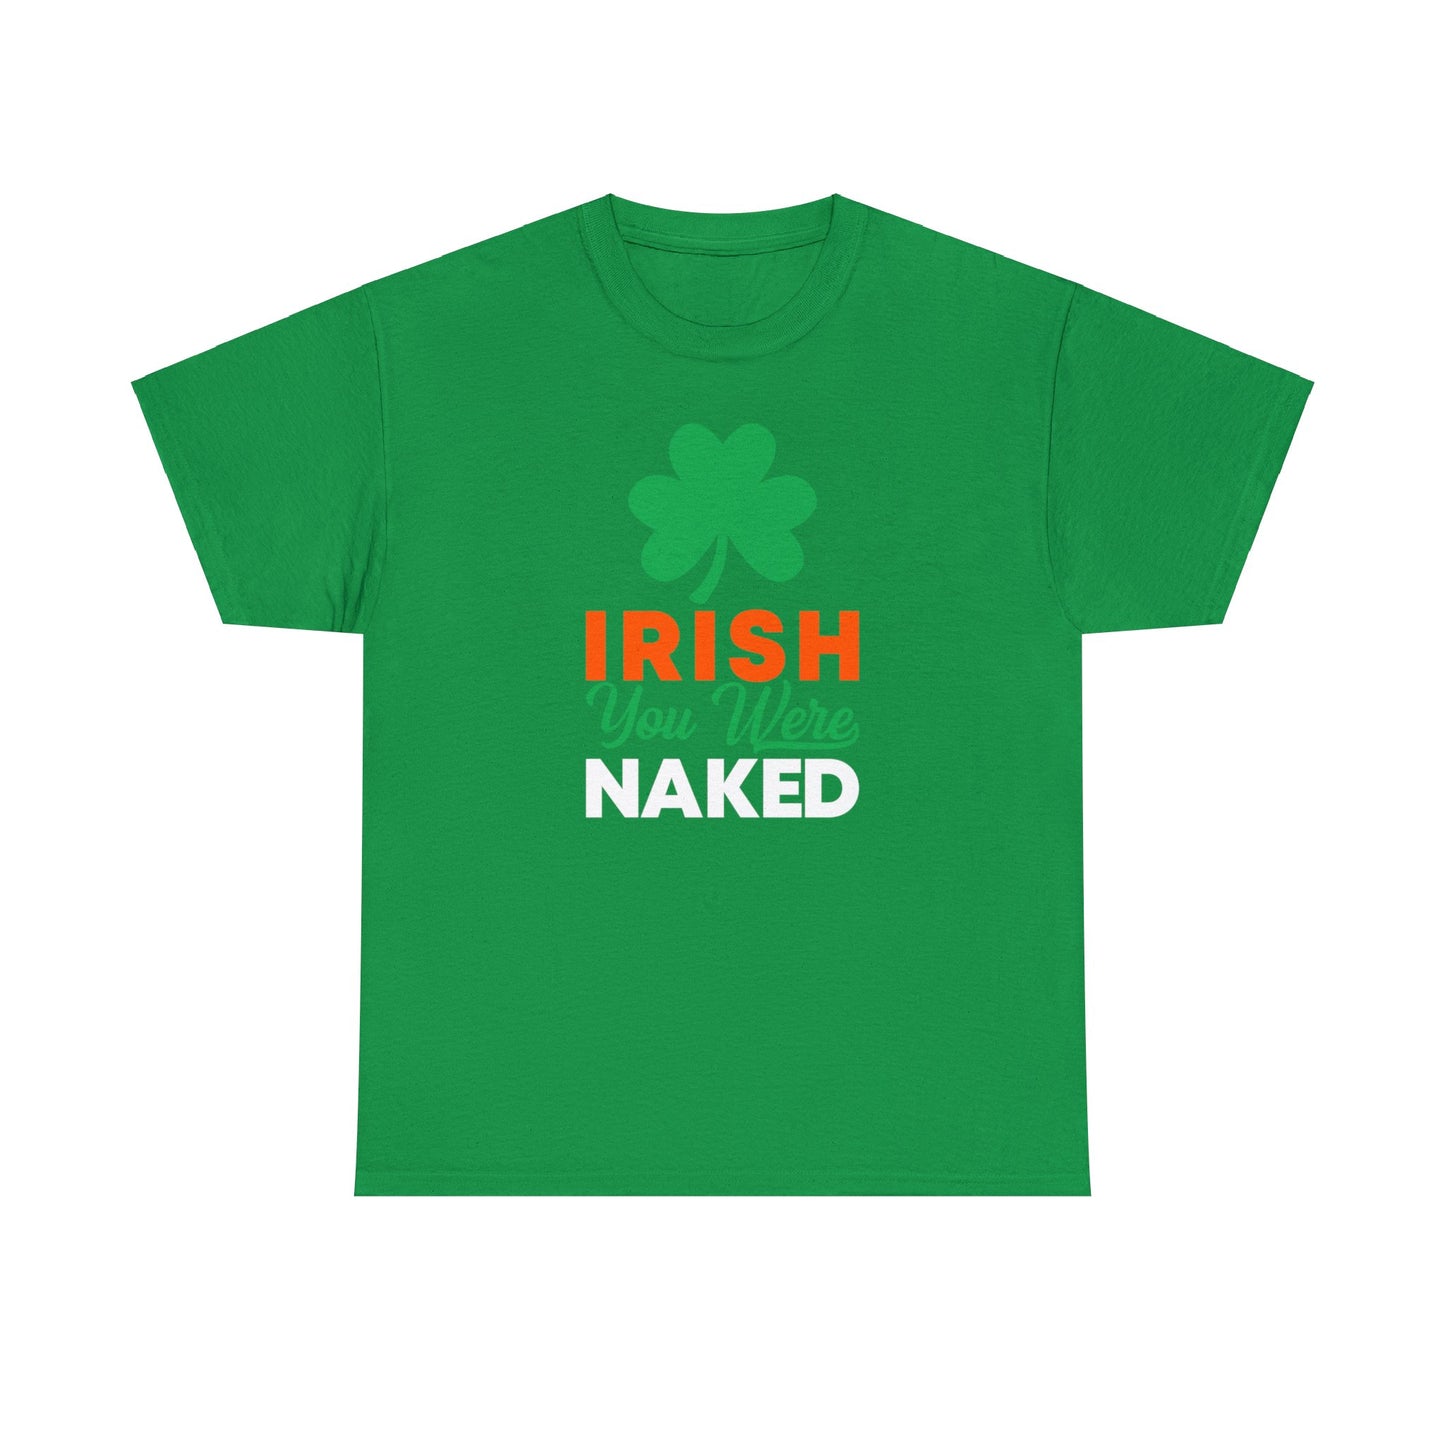 Sarcastic Irish T-Shirt For Shenanigans TShirt For St. Patrick's Day T Shirt